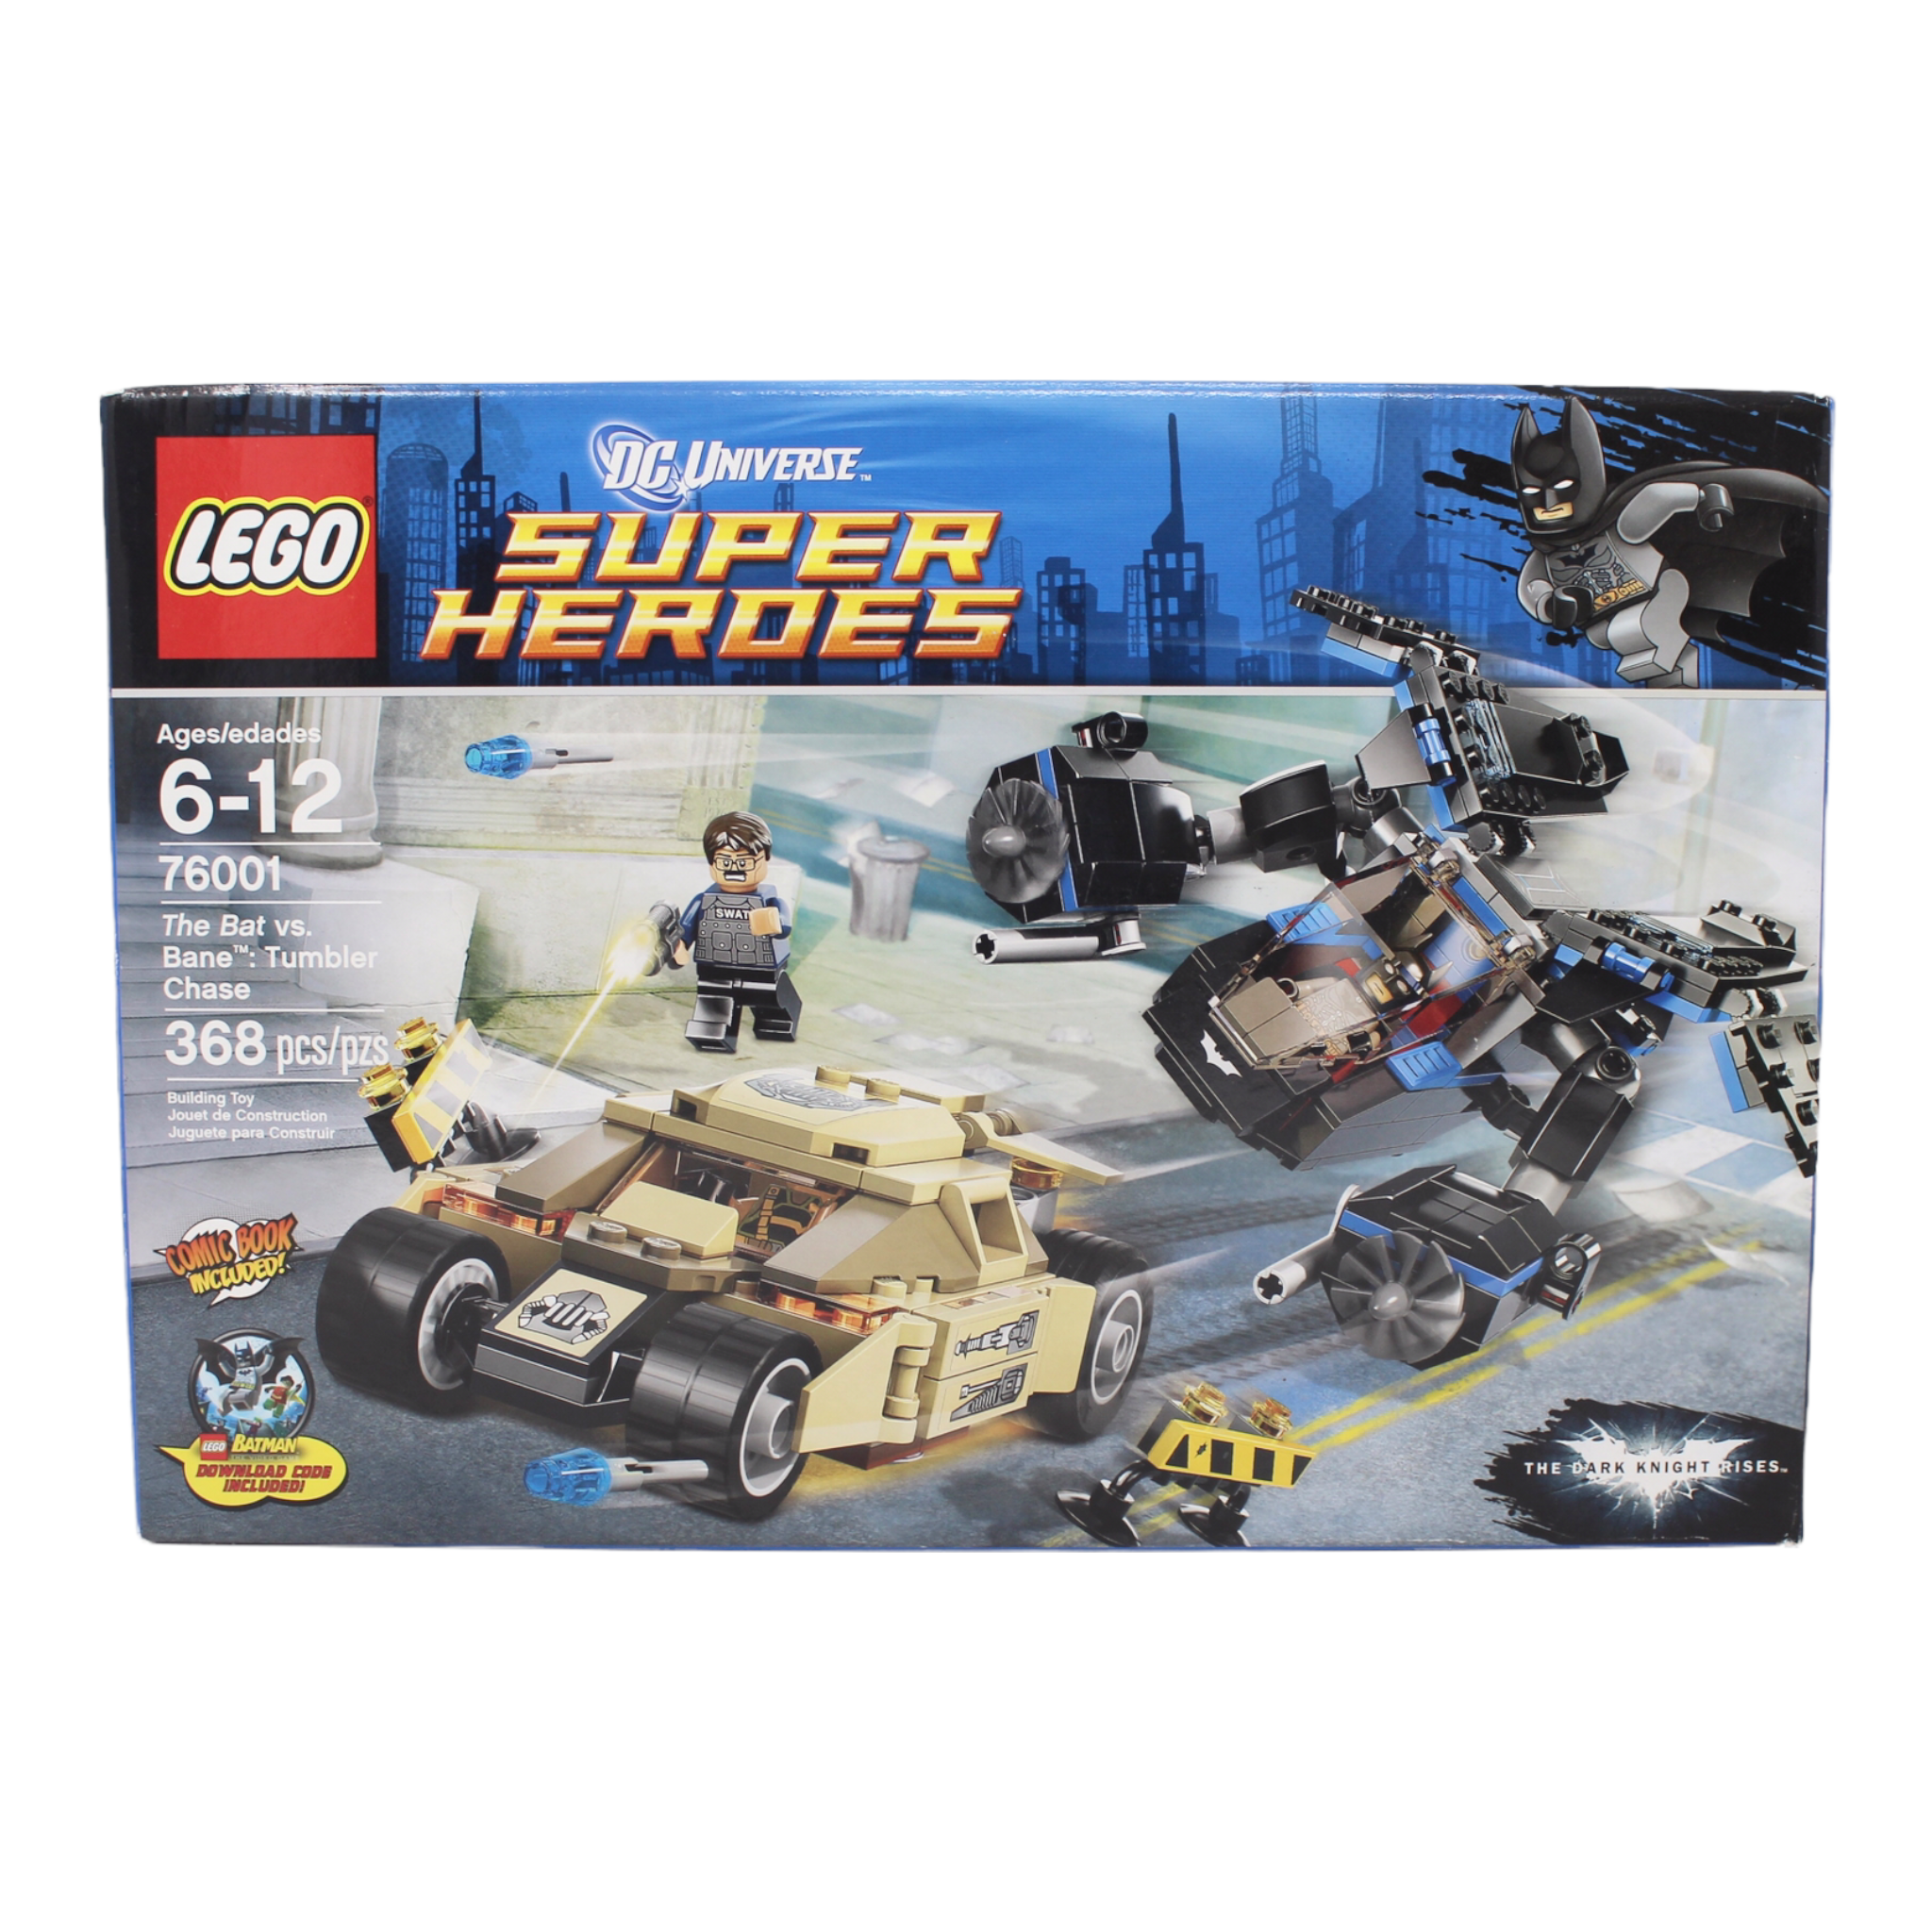 Retired Set 76001 DC Super Heroes The Bat vs. Bane: Tumbler Chase